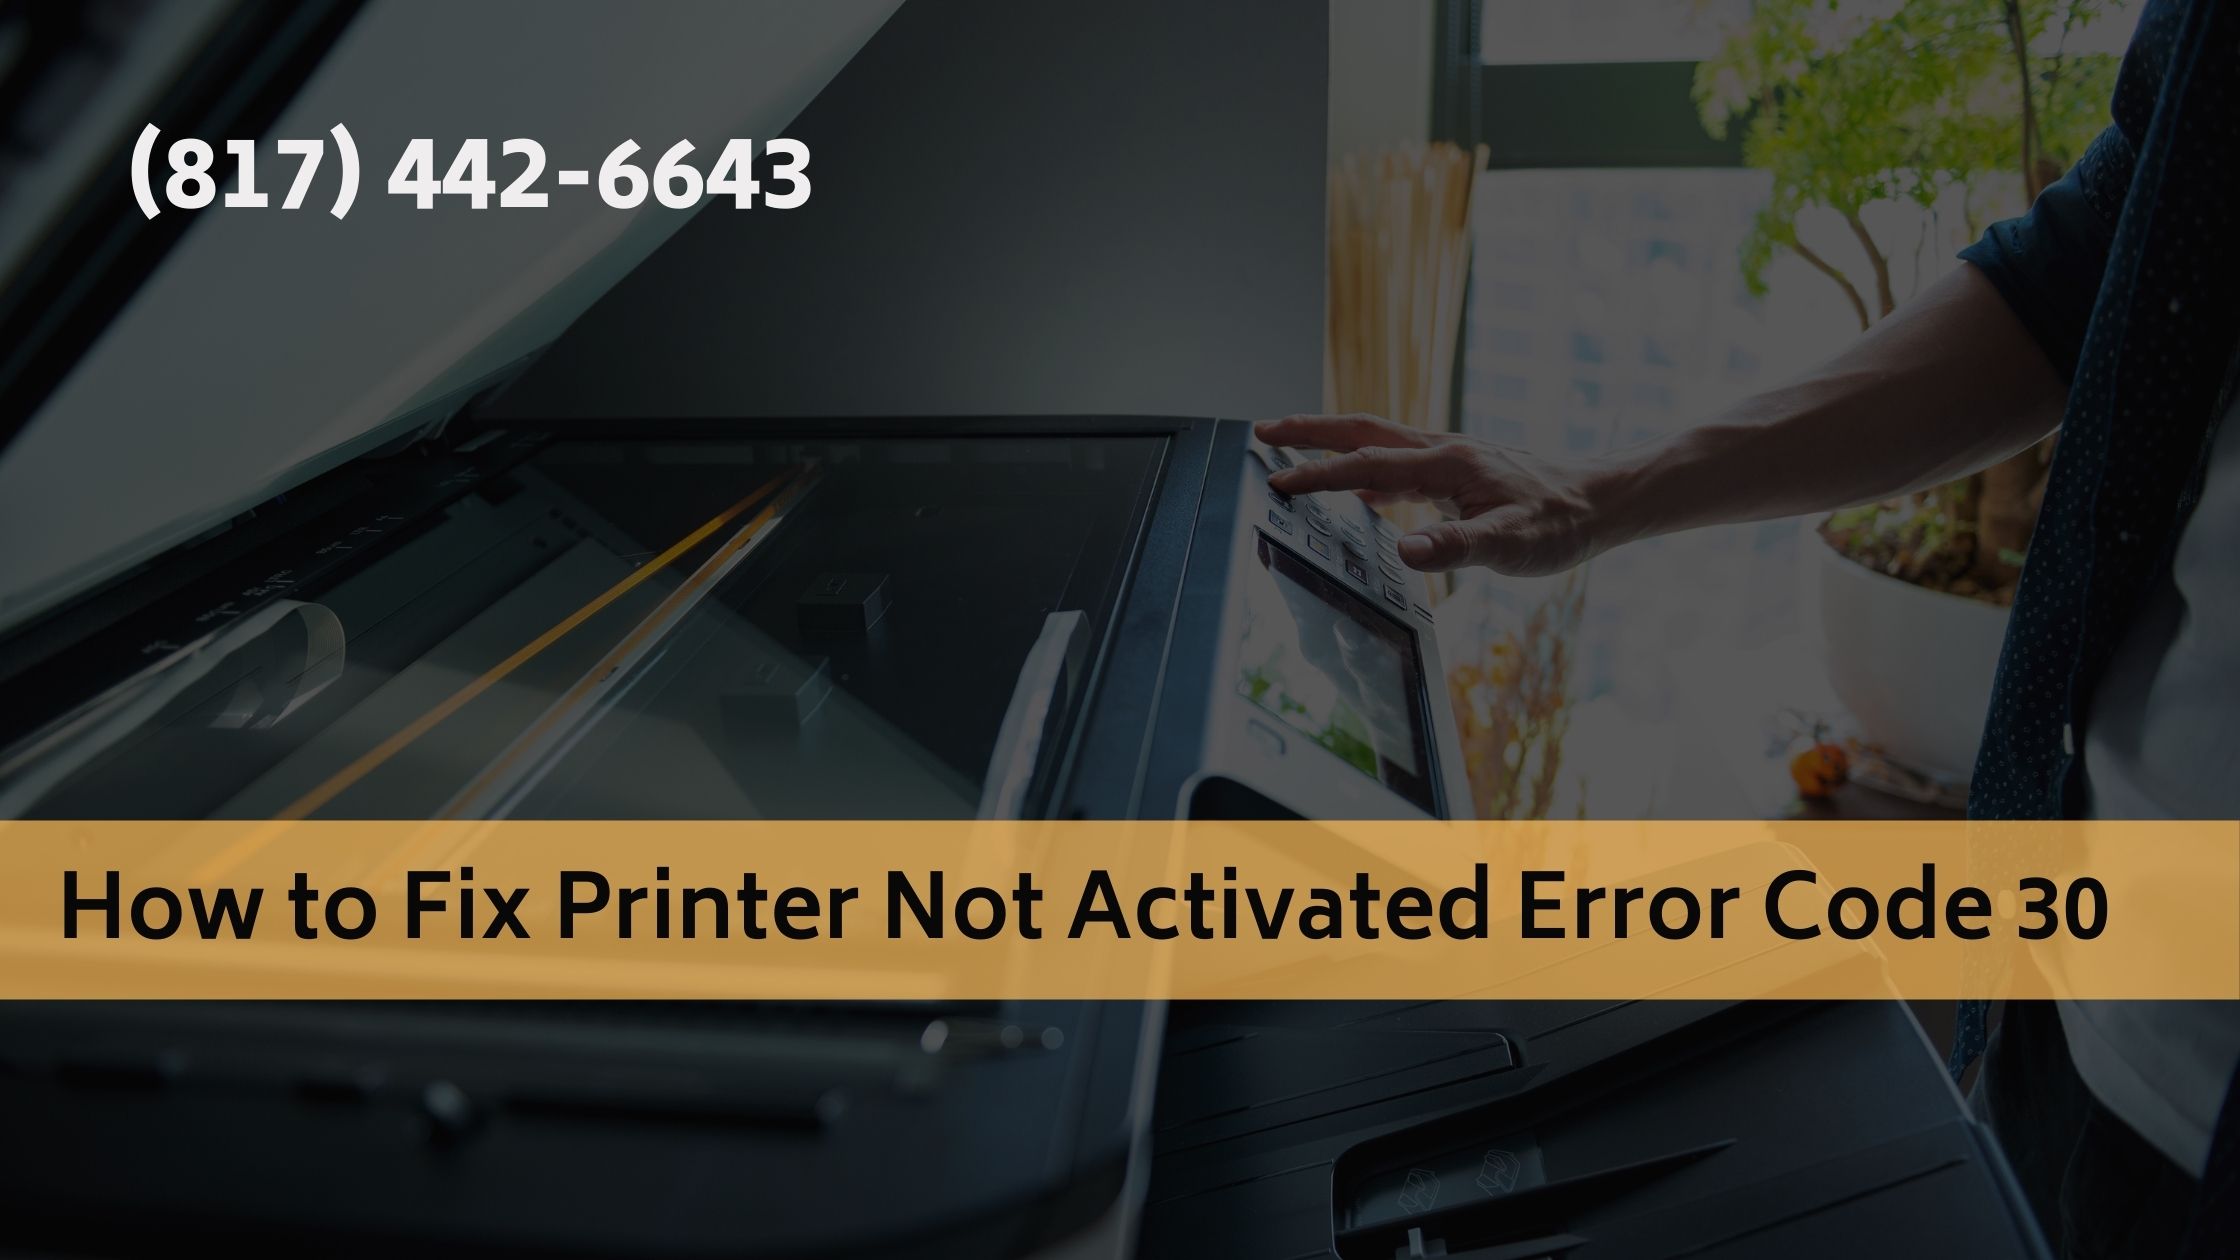 How to Fix (817) 442-6643 Printer Not Activated Error Code 30